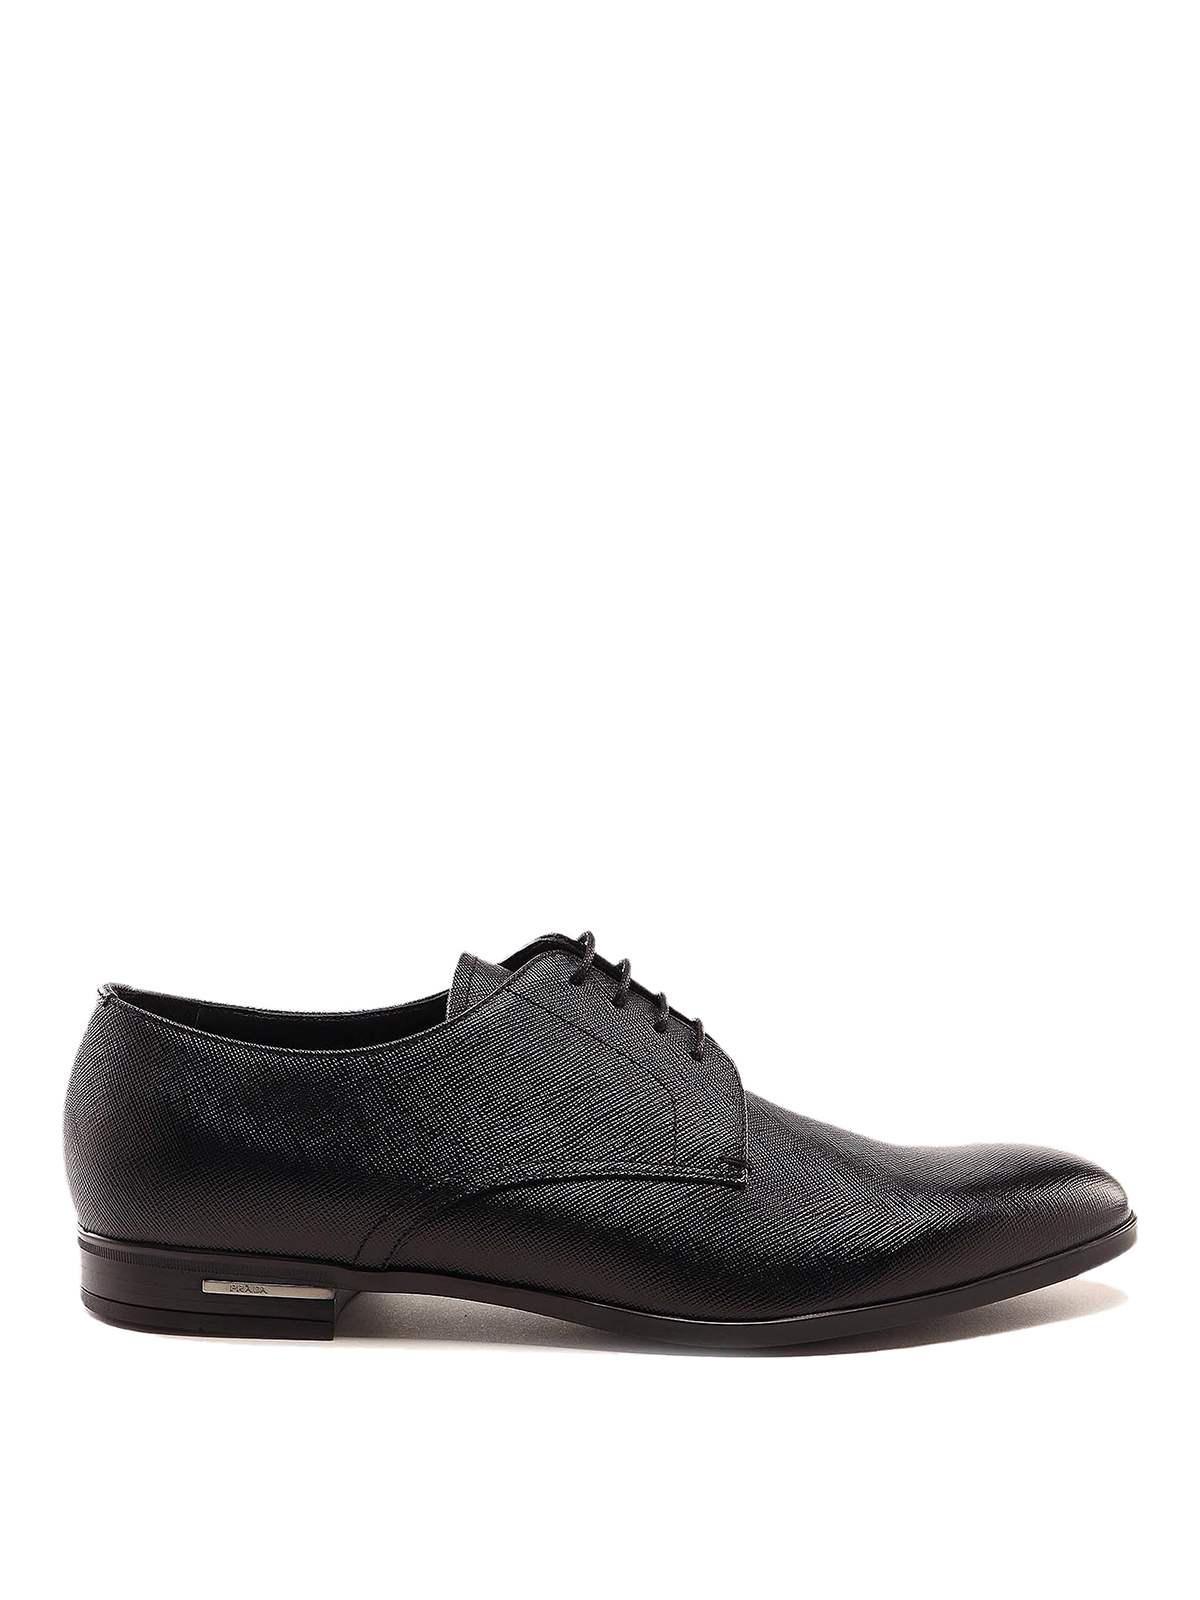 Prada Saffiano Leather Derby Shoes In Black